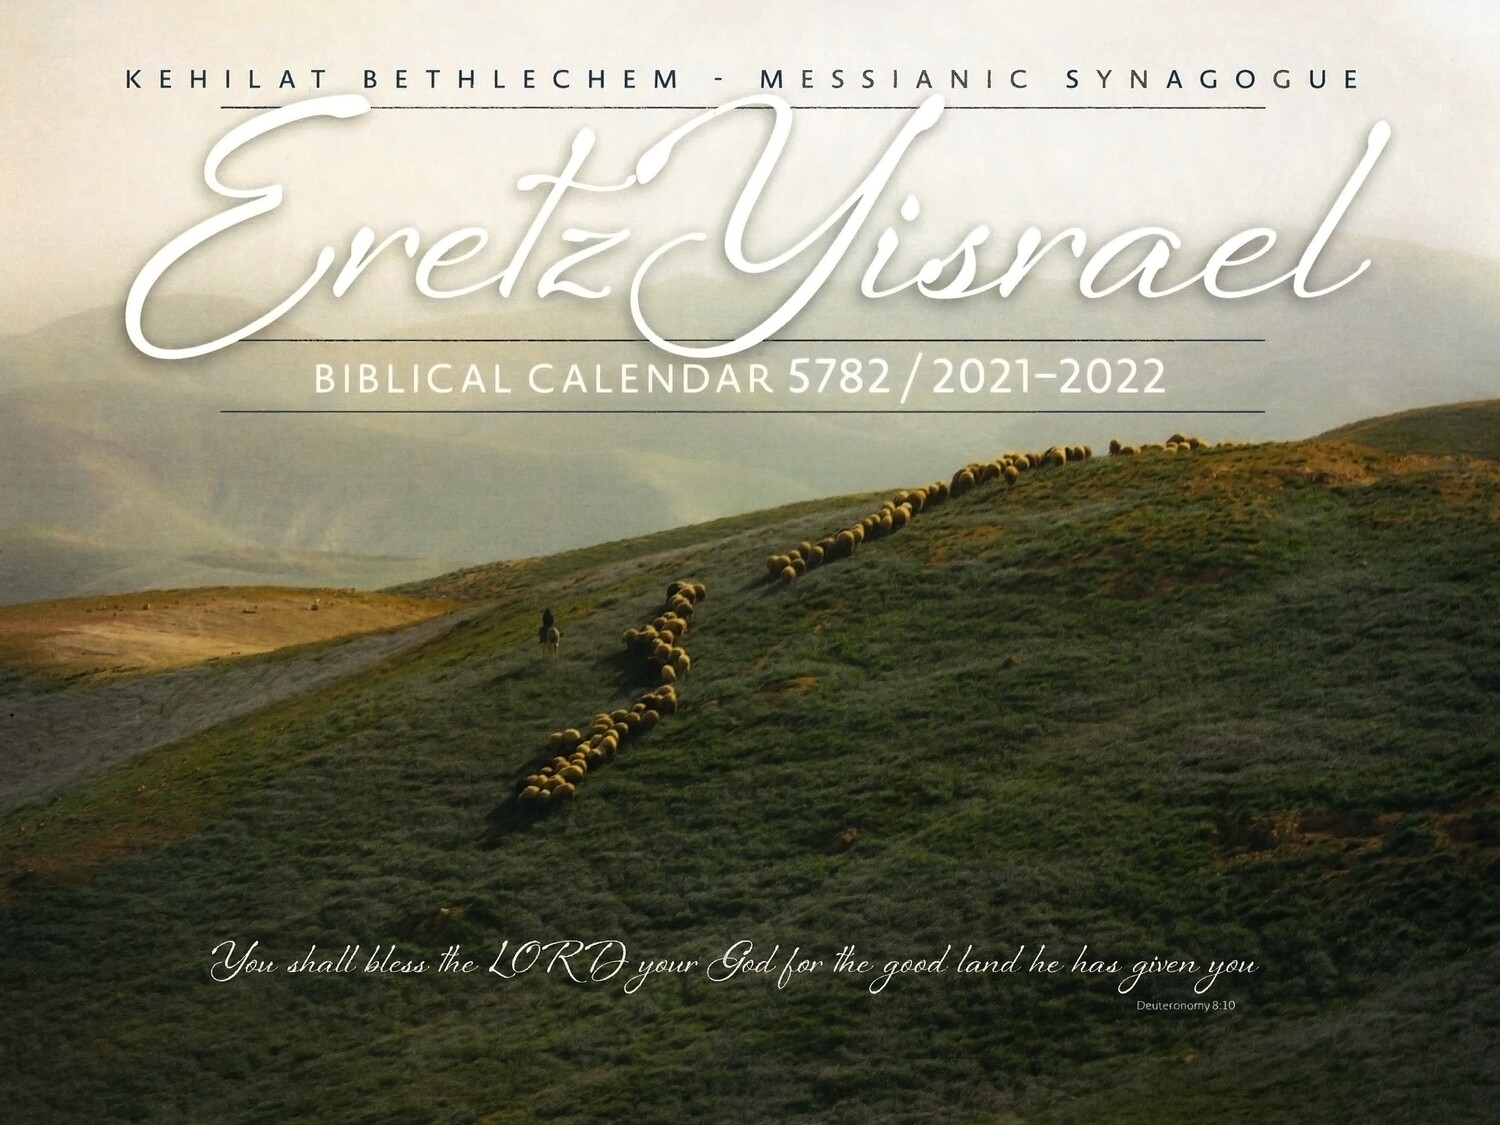 Biblical Calendar 5782 / 2021-2022 - INDIAN PRINT